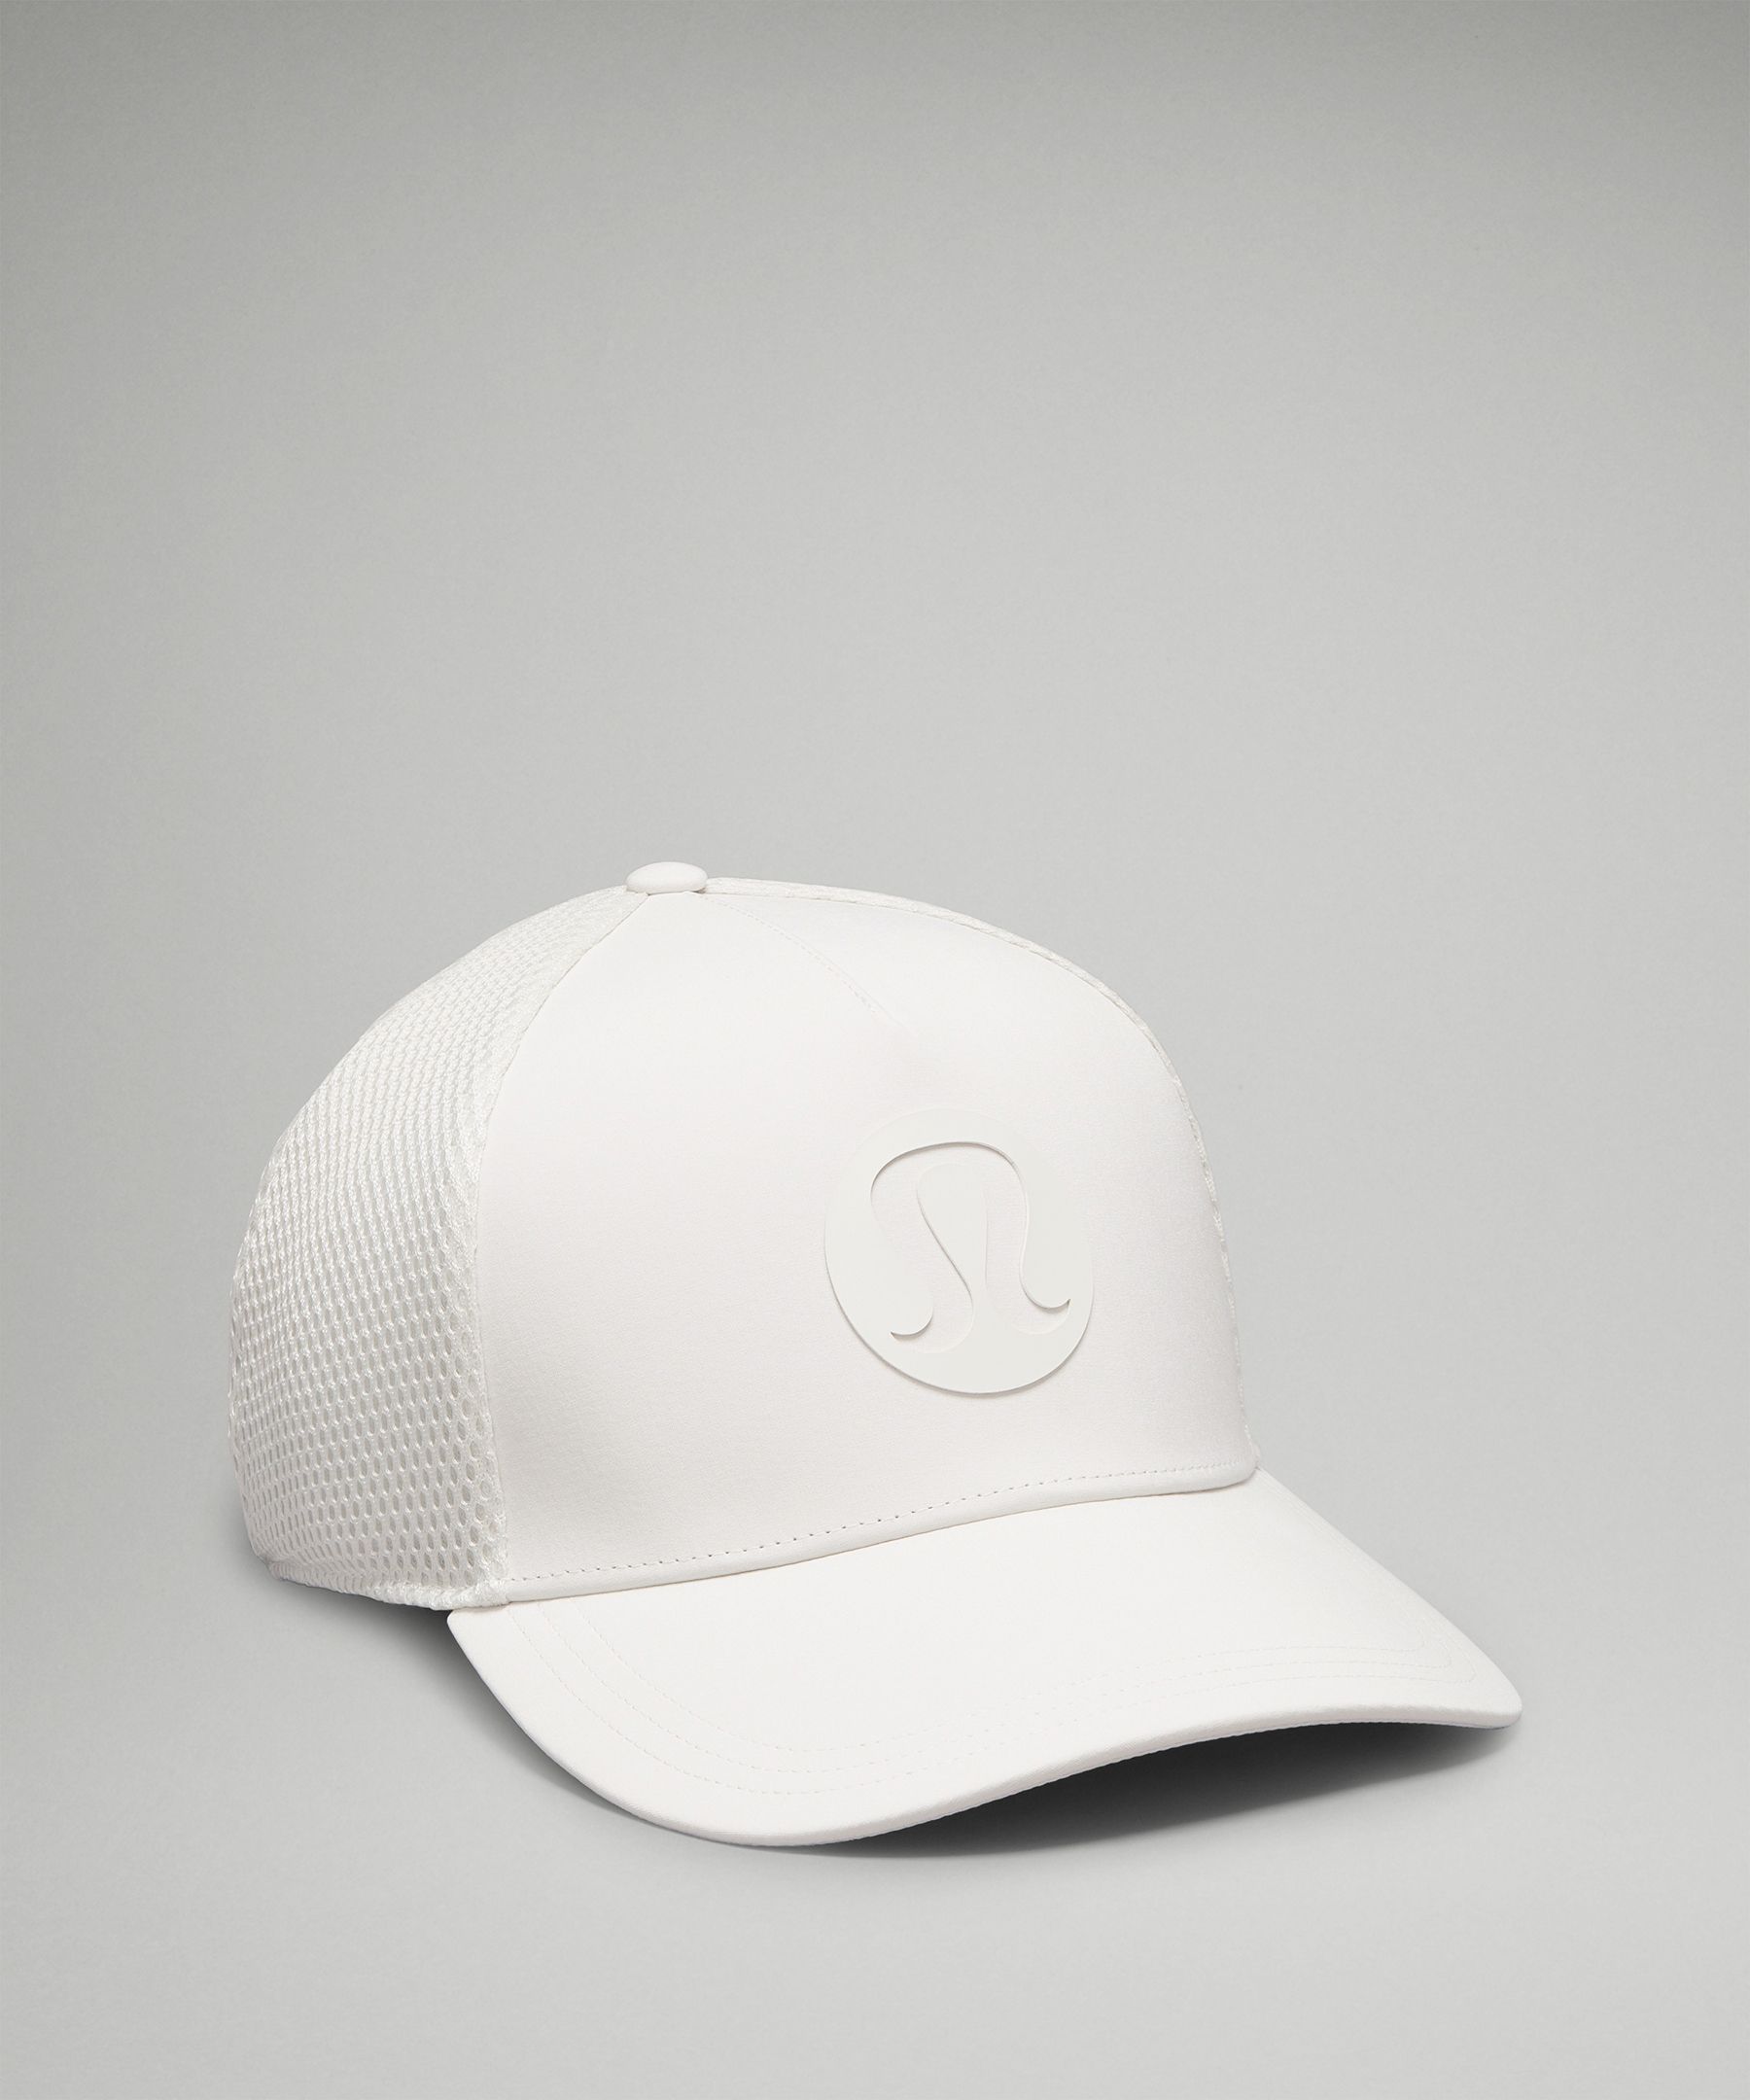 Lululemon Casual Trucker Hat | White|Neutral - Size S/M